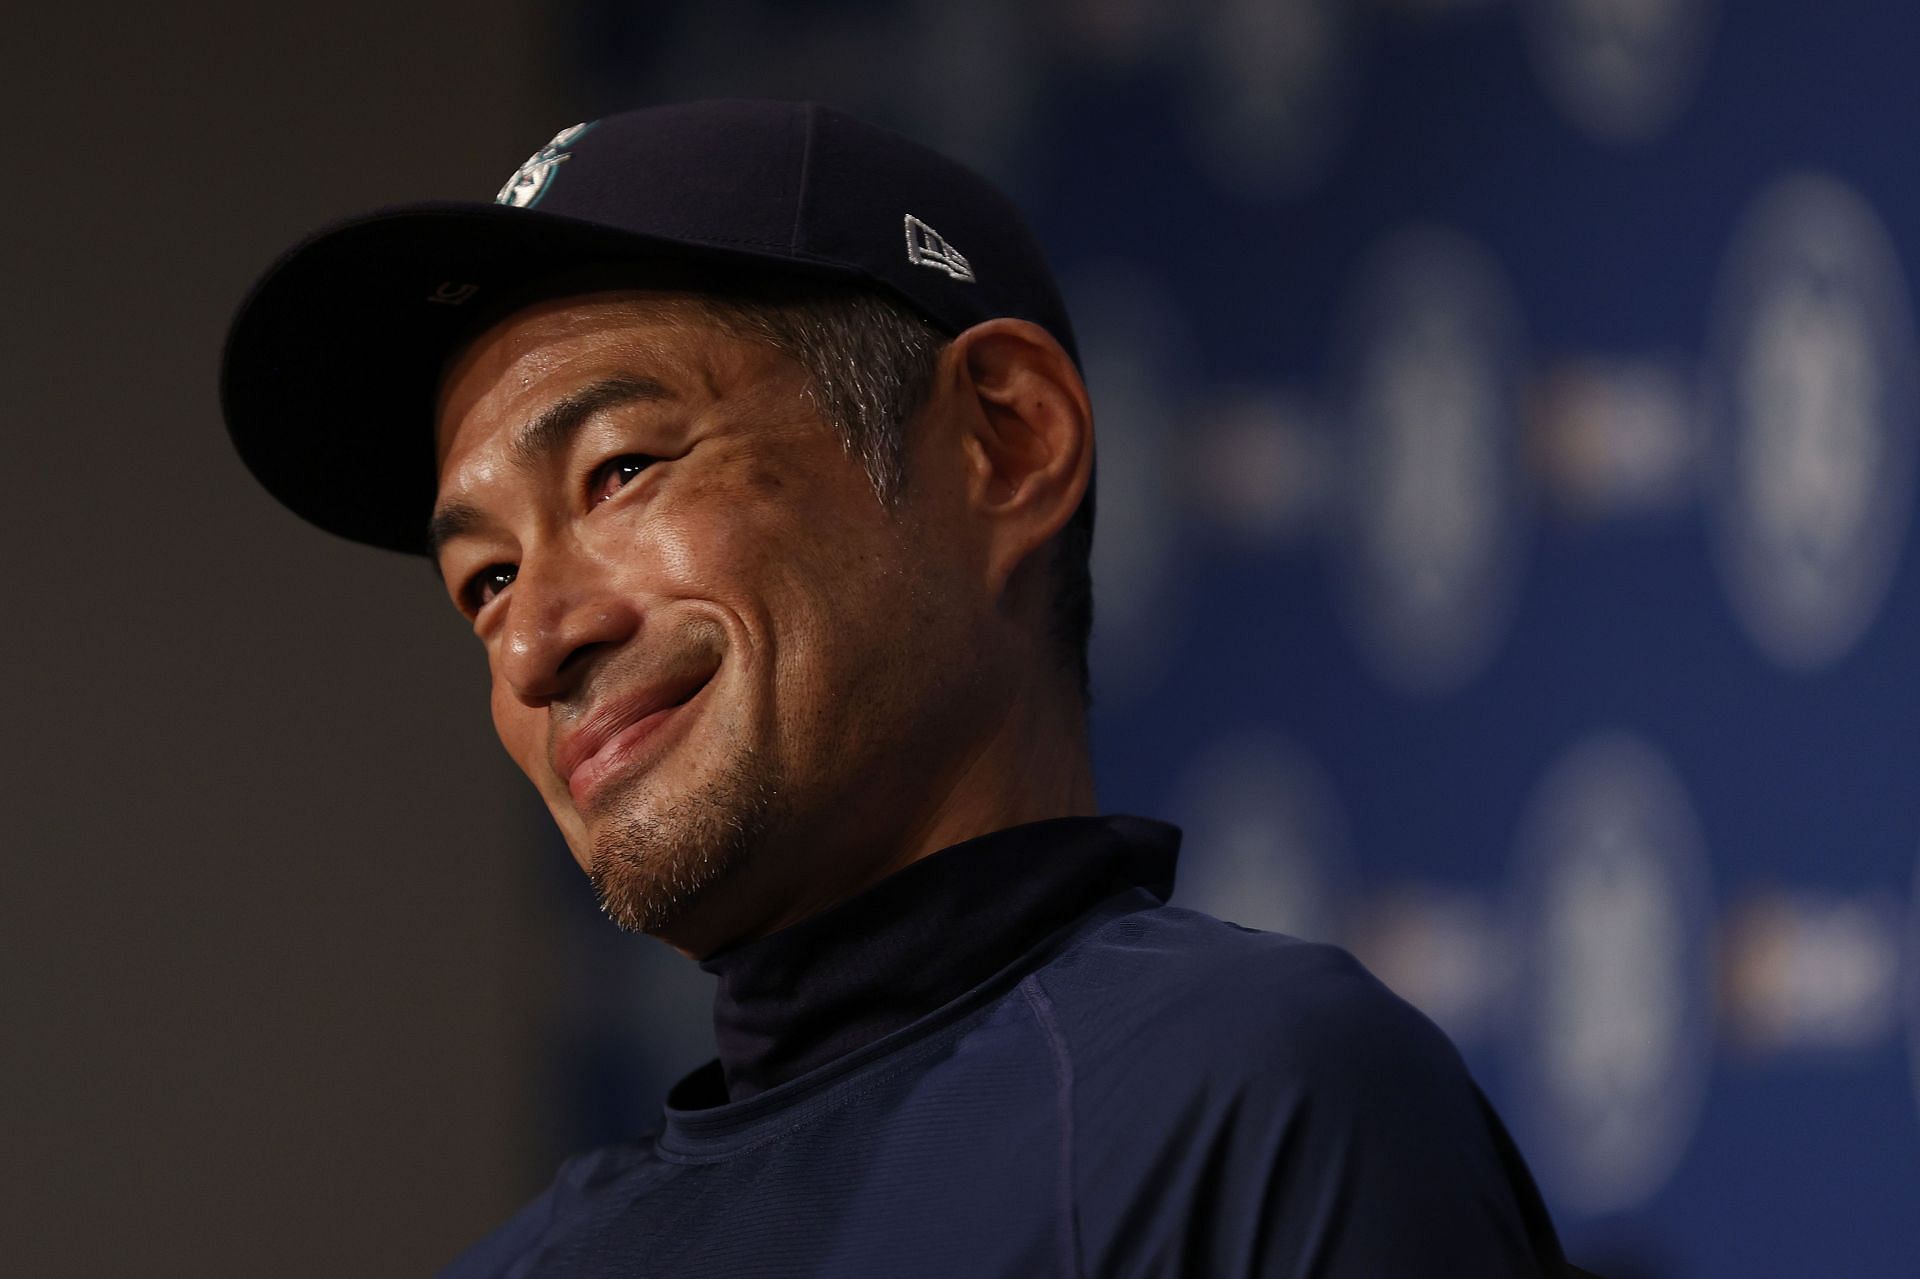 Ichiro's Number “51” – Fan Interference